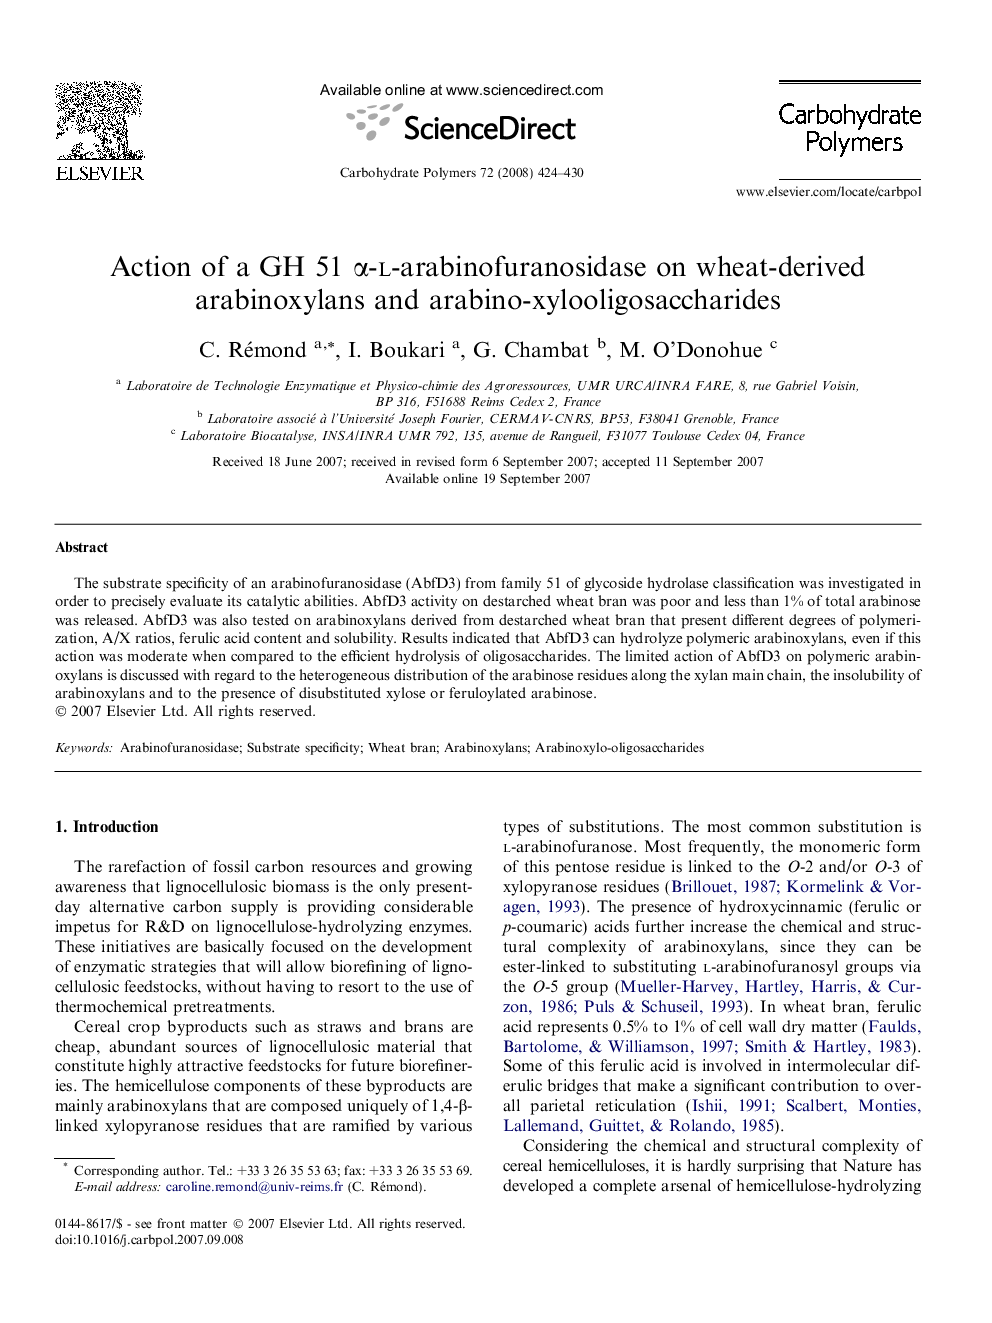 Action of a GH 51 α-l-arabinofuranosidase on wheat-derived arabinoxylans and arabino-xylooligosaccharides